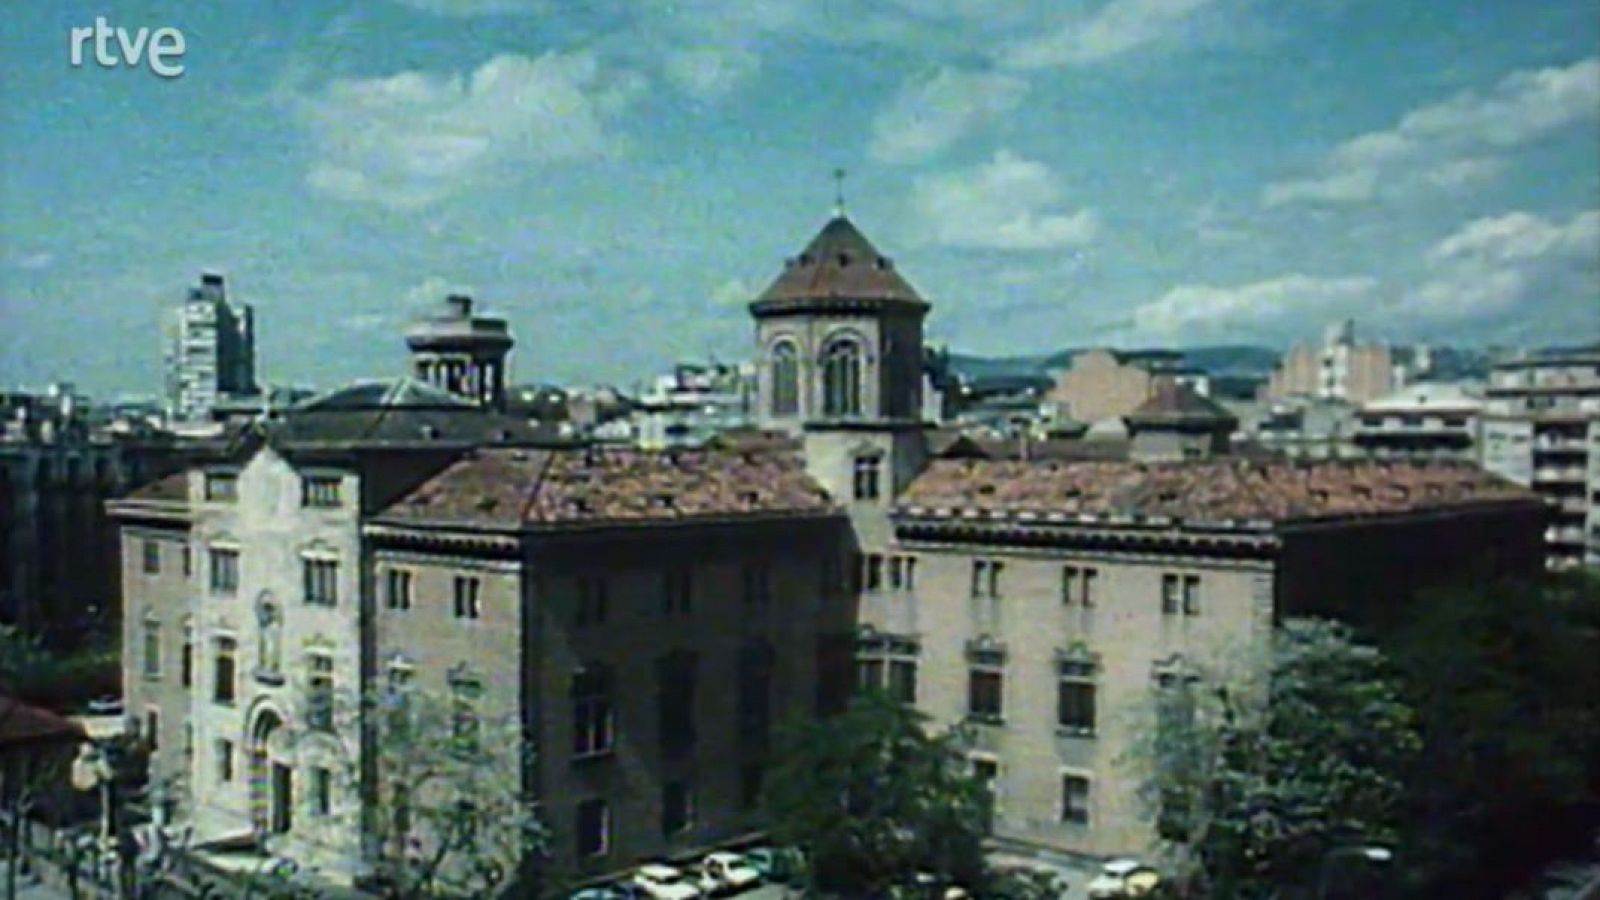 Seminiari Conciliar de Barcelona. Centenari de l'edifici 1883-1983 -Arxiu TVE Catalunya